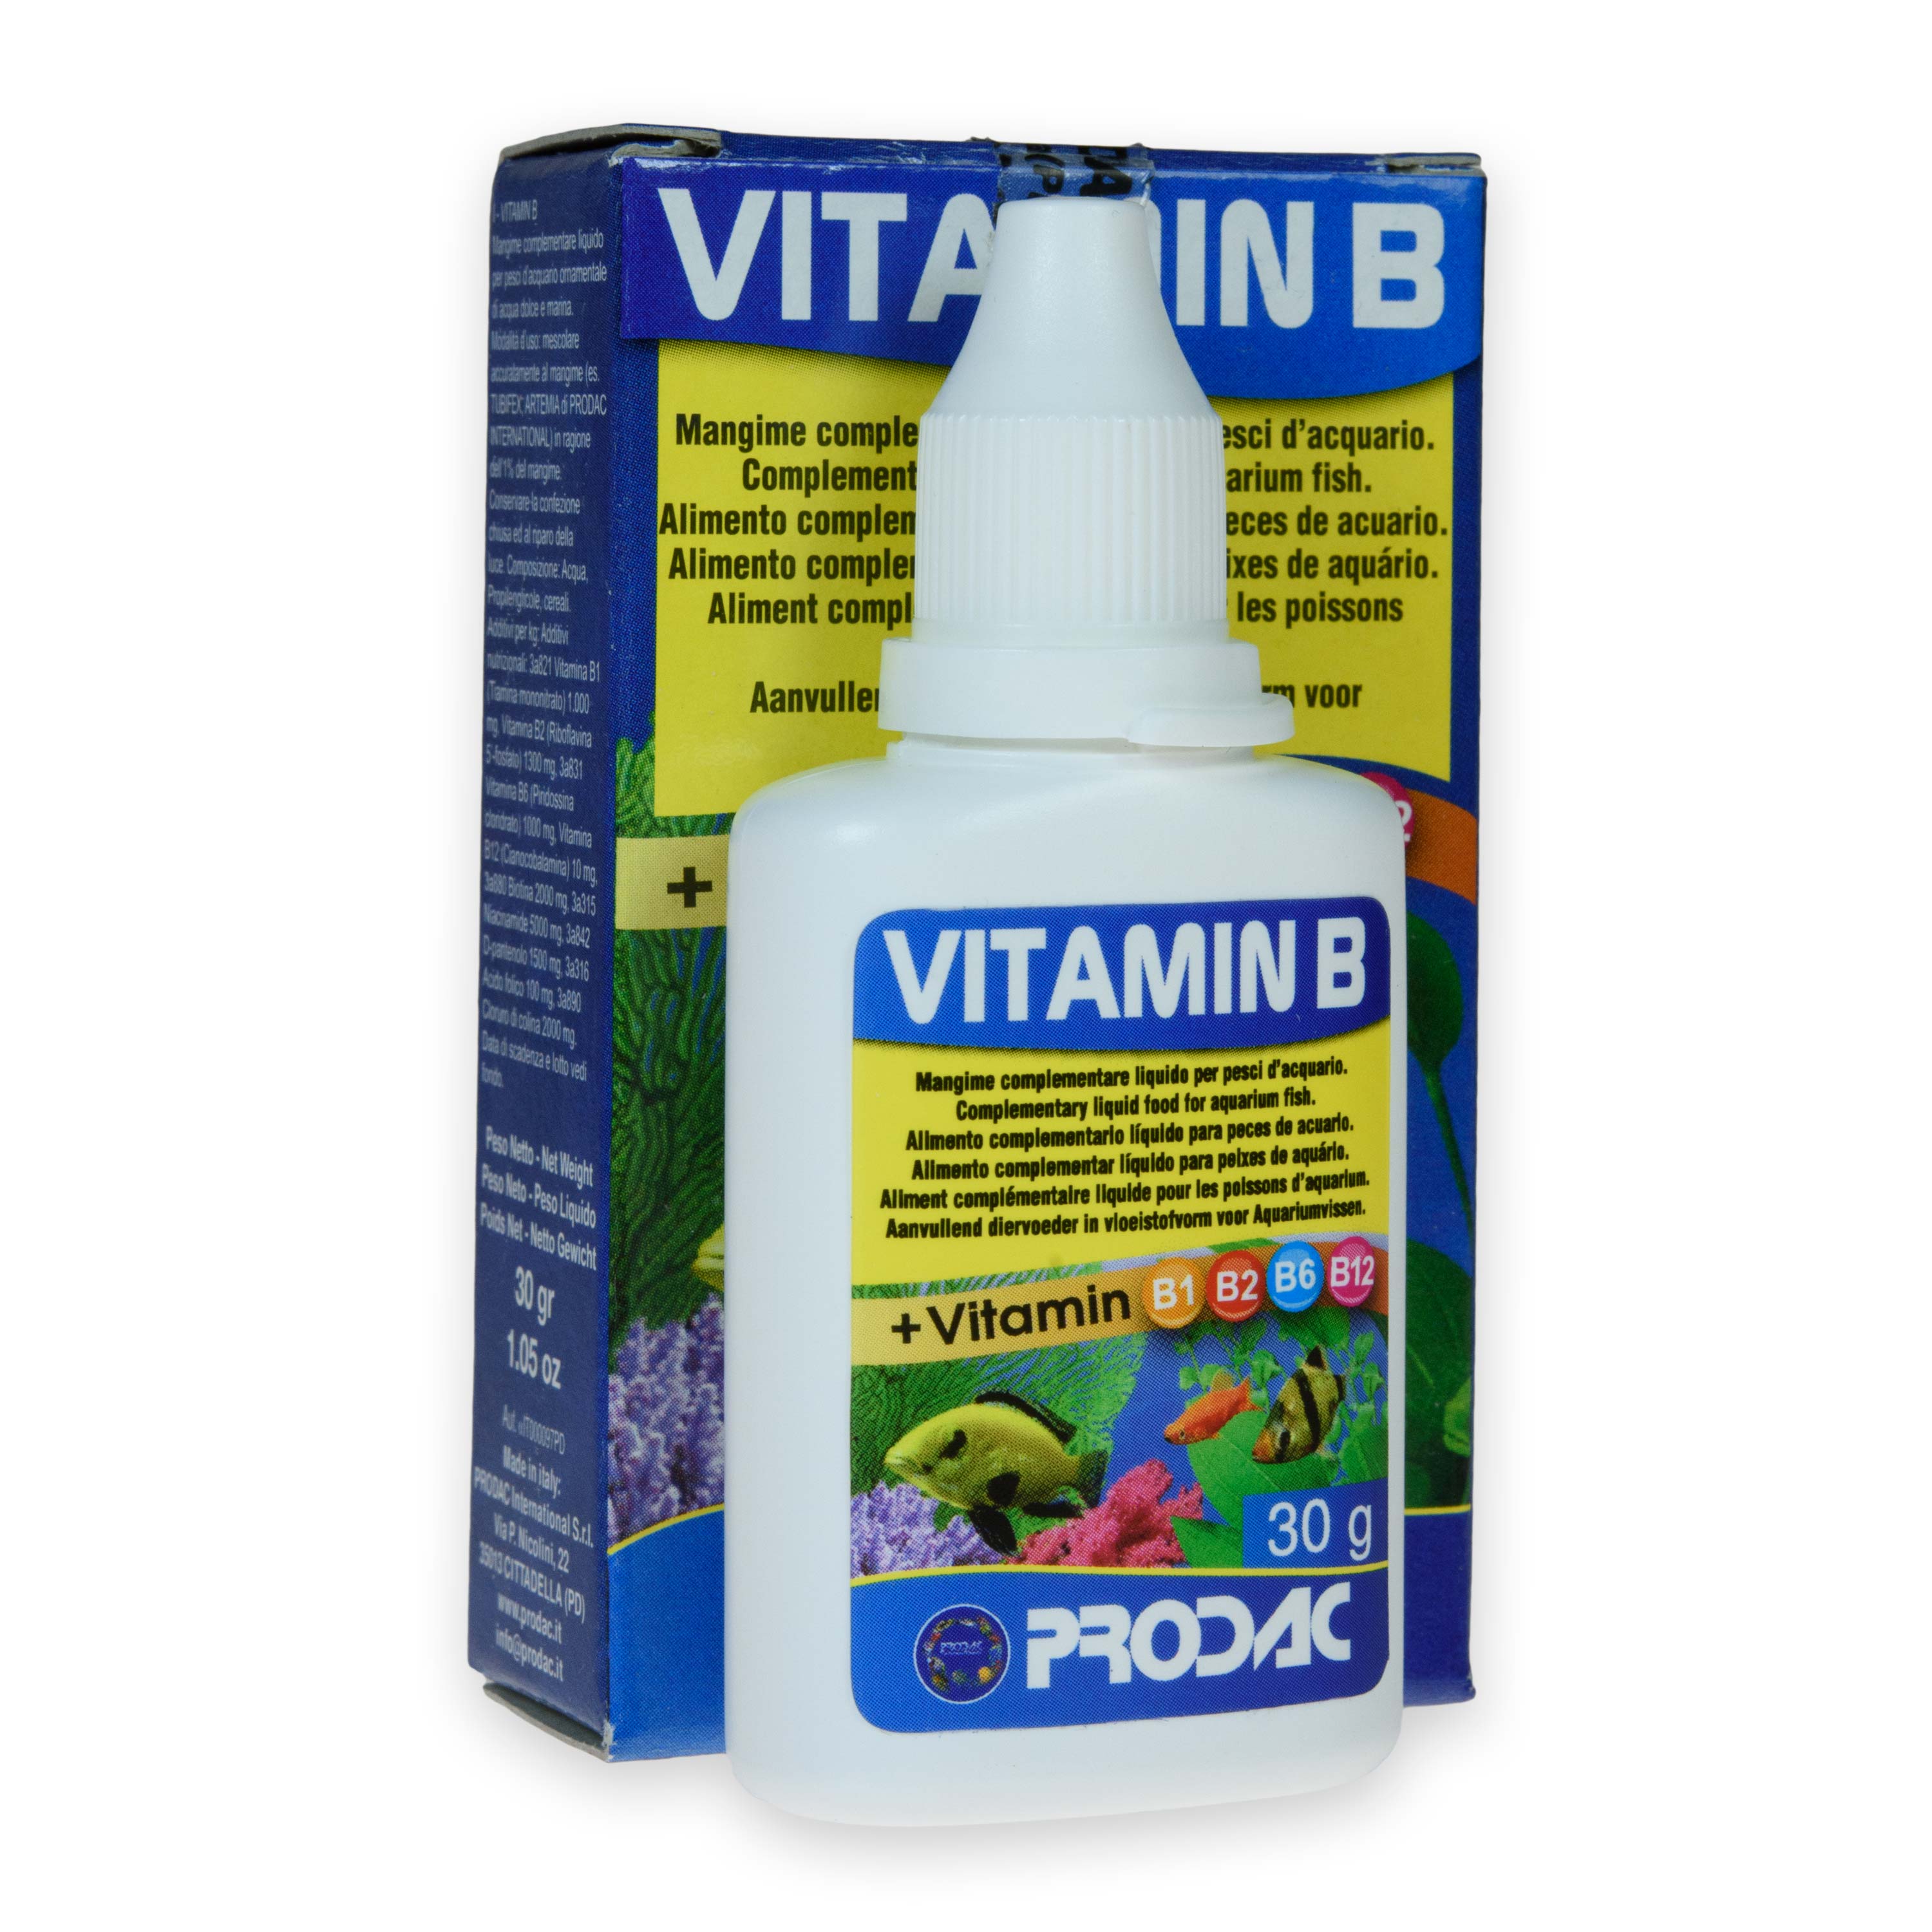 Prodac Vitamin B 30 g Package Content